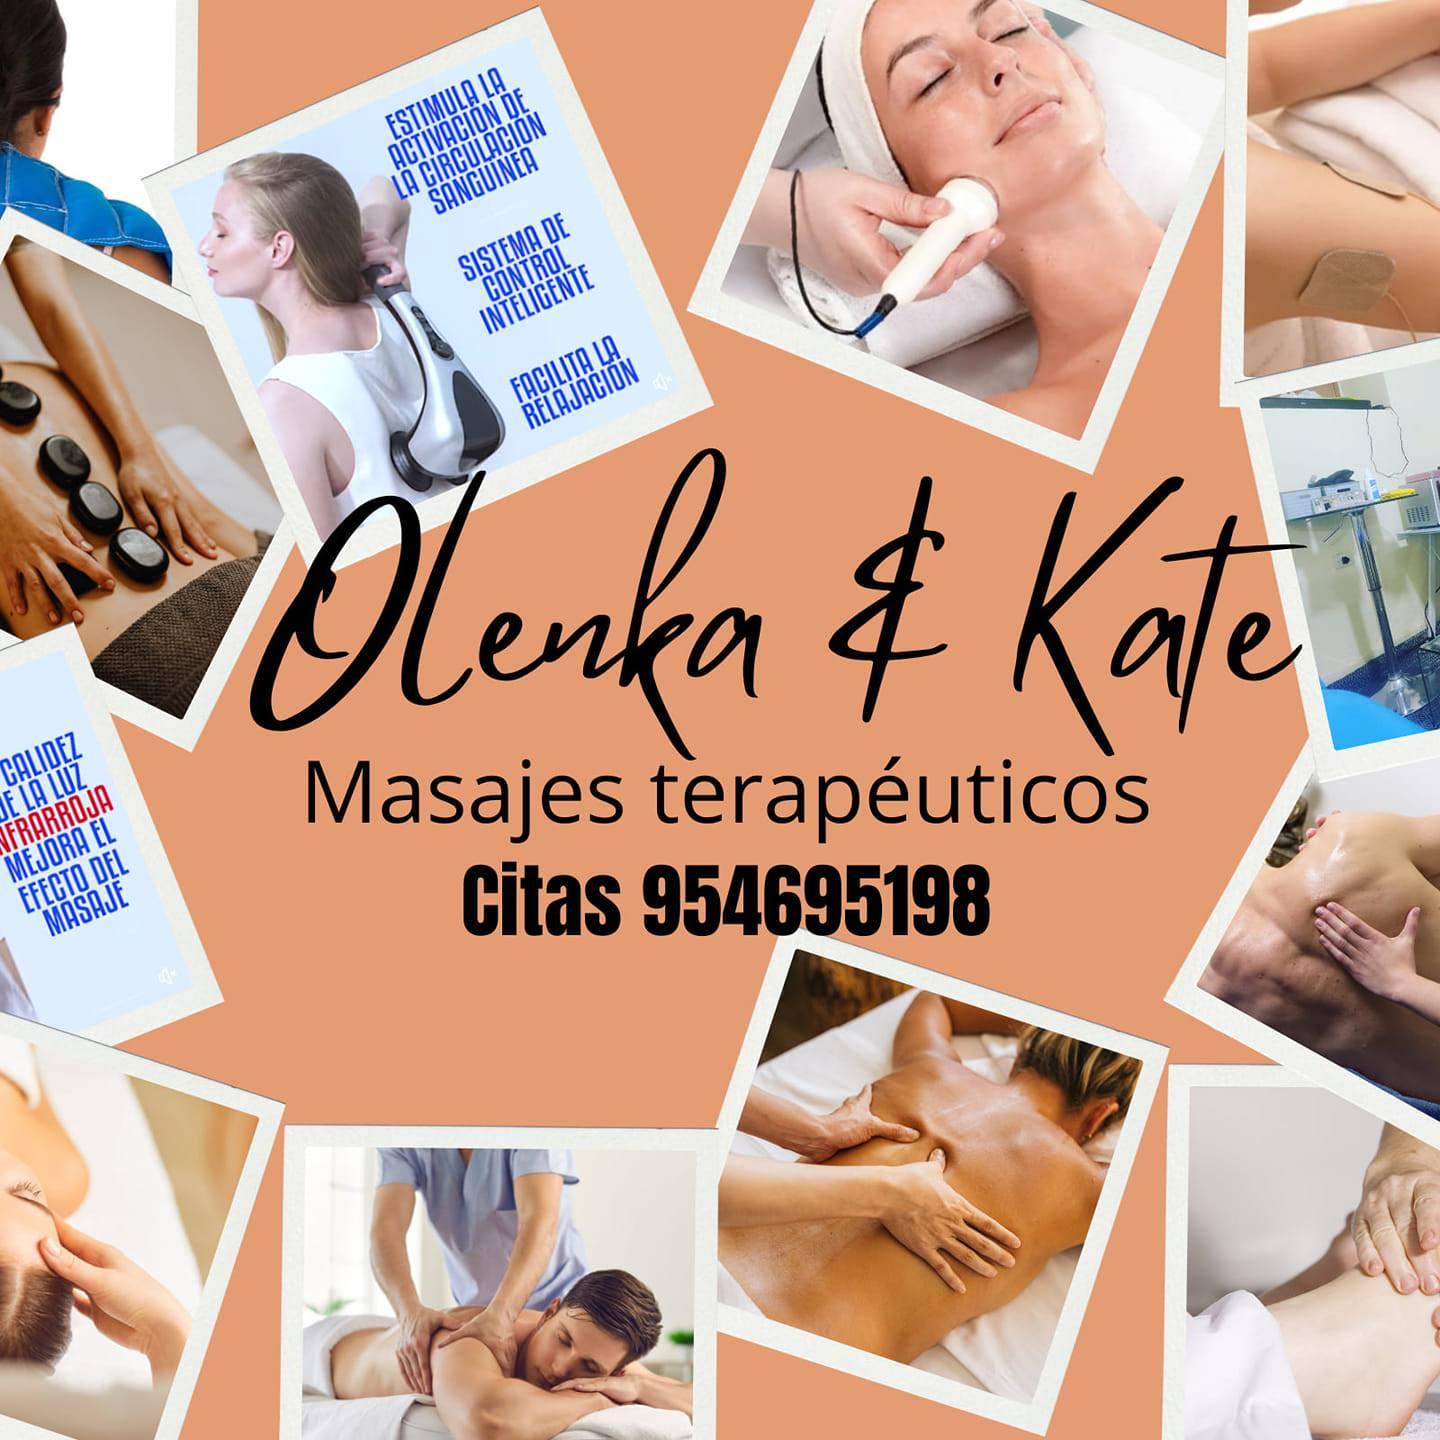 Masajes Terapéuticos Olenka & Kate | CAJAMARCA | TeAviso.pe